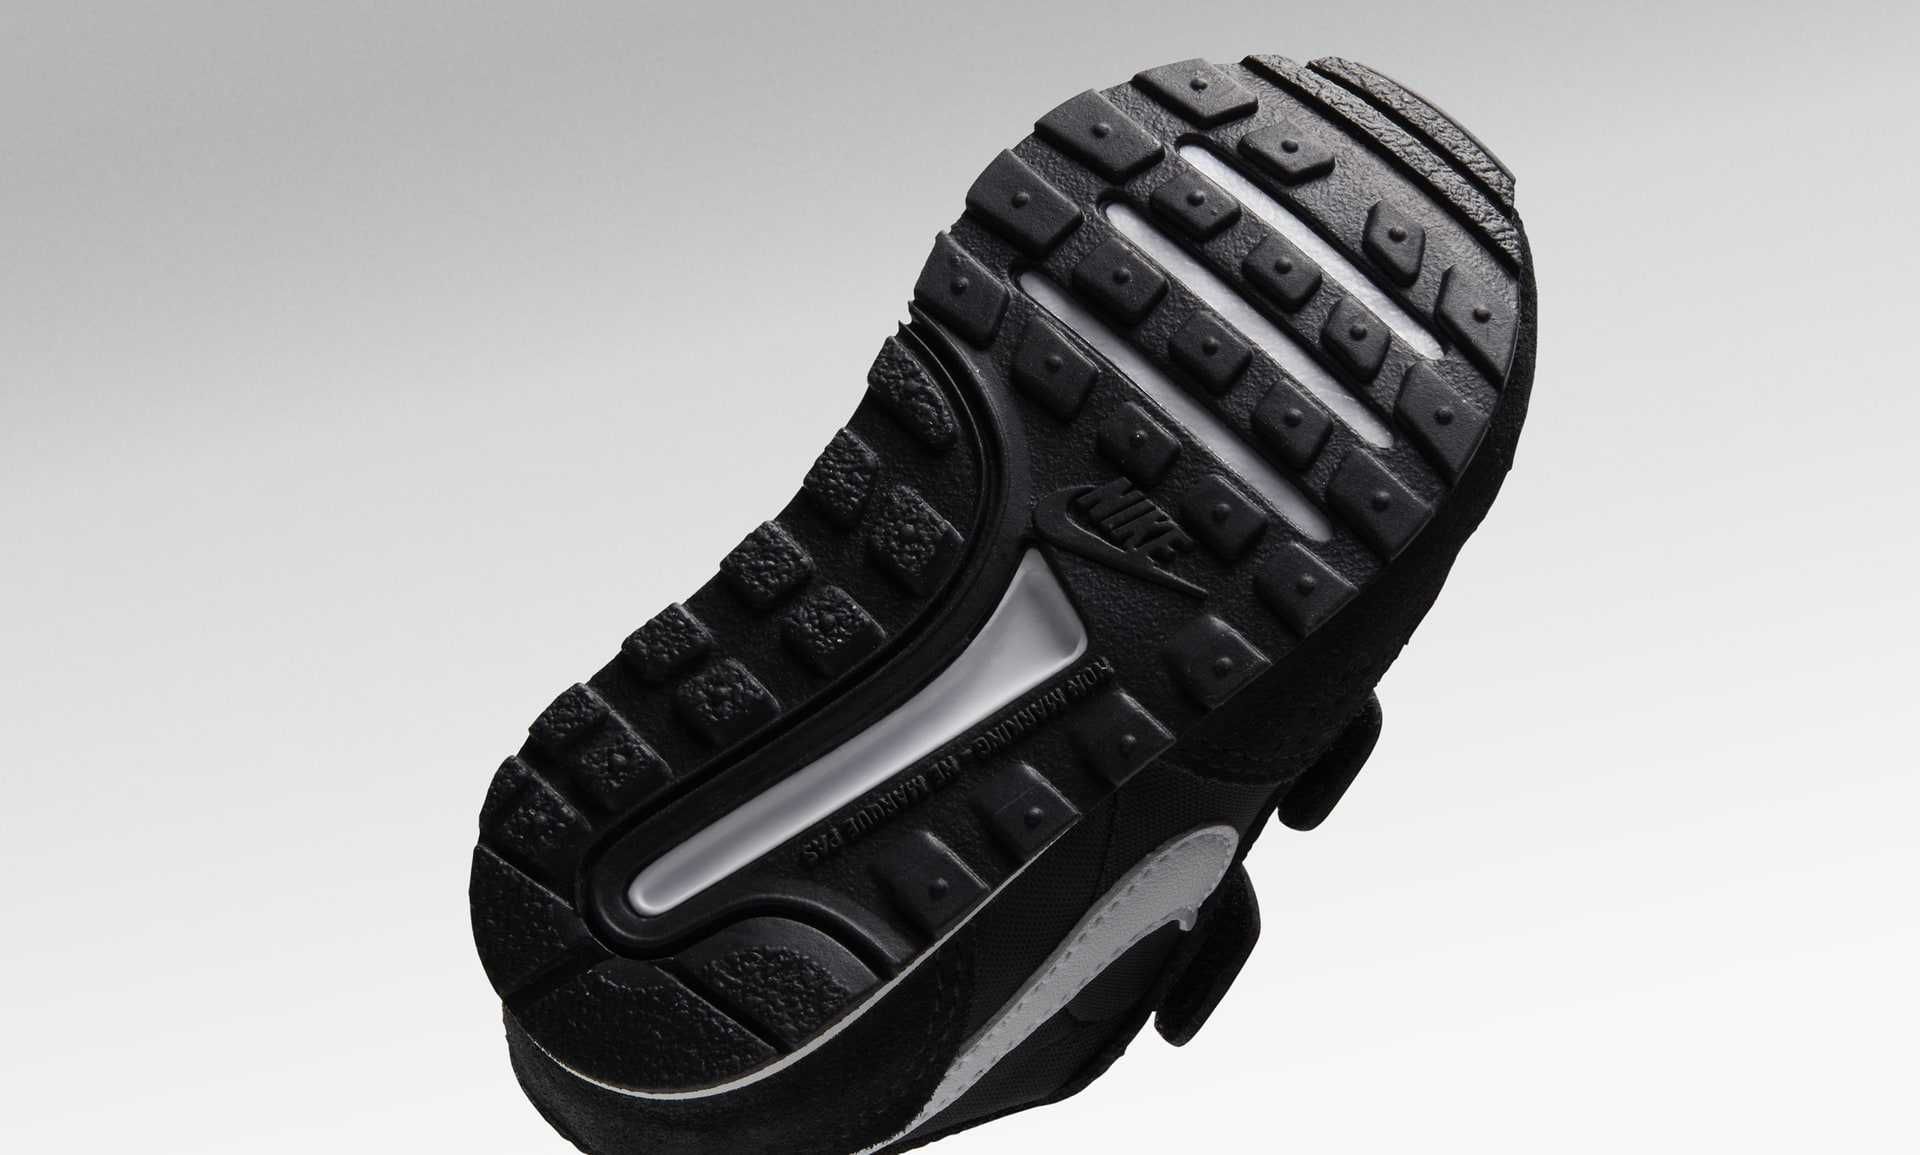 Zapatillas para niño plana NIKE cn8560-002 en negro